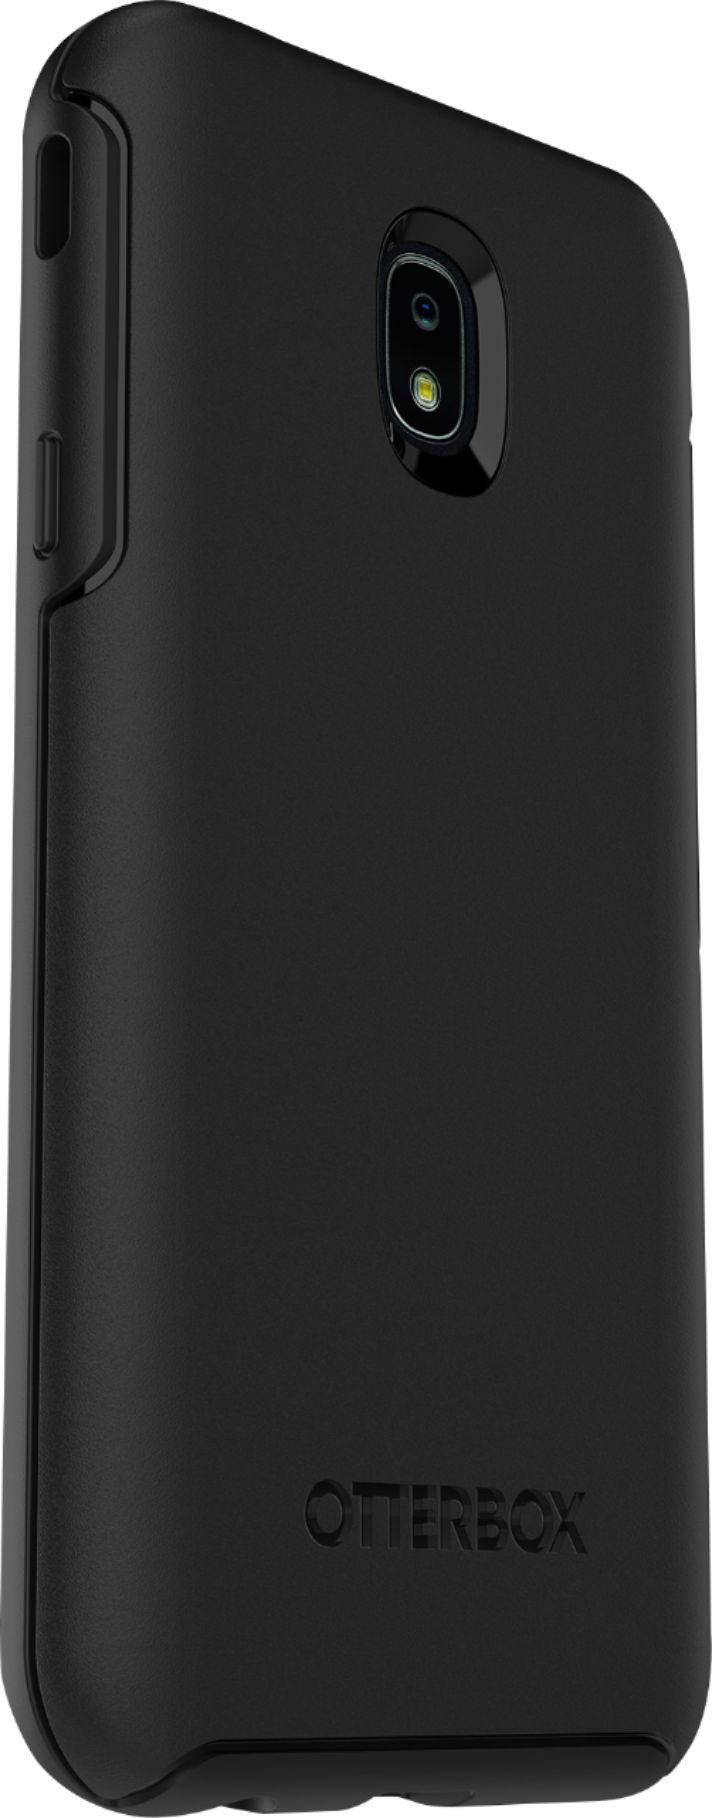 Angle View: OtterBox - Symmetry Series Samsung Galaxy J7 Case for Samsung Galaxy J7 - Black